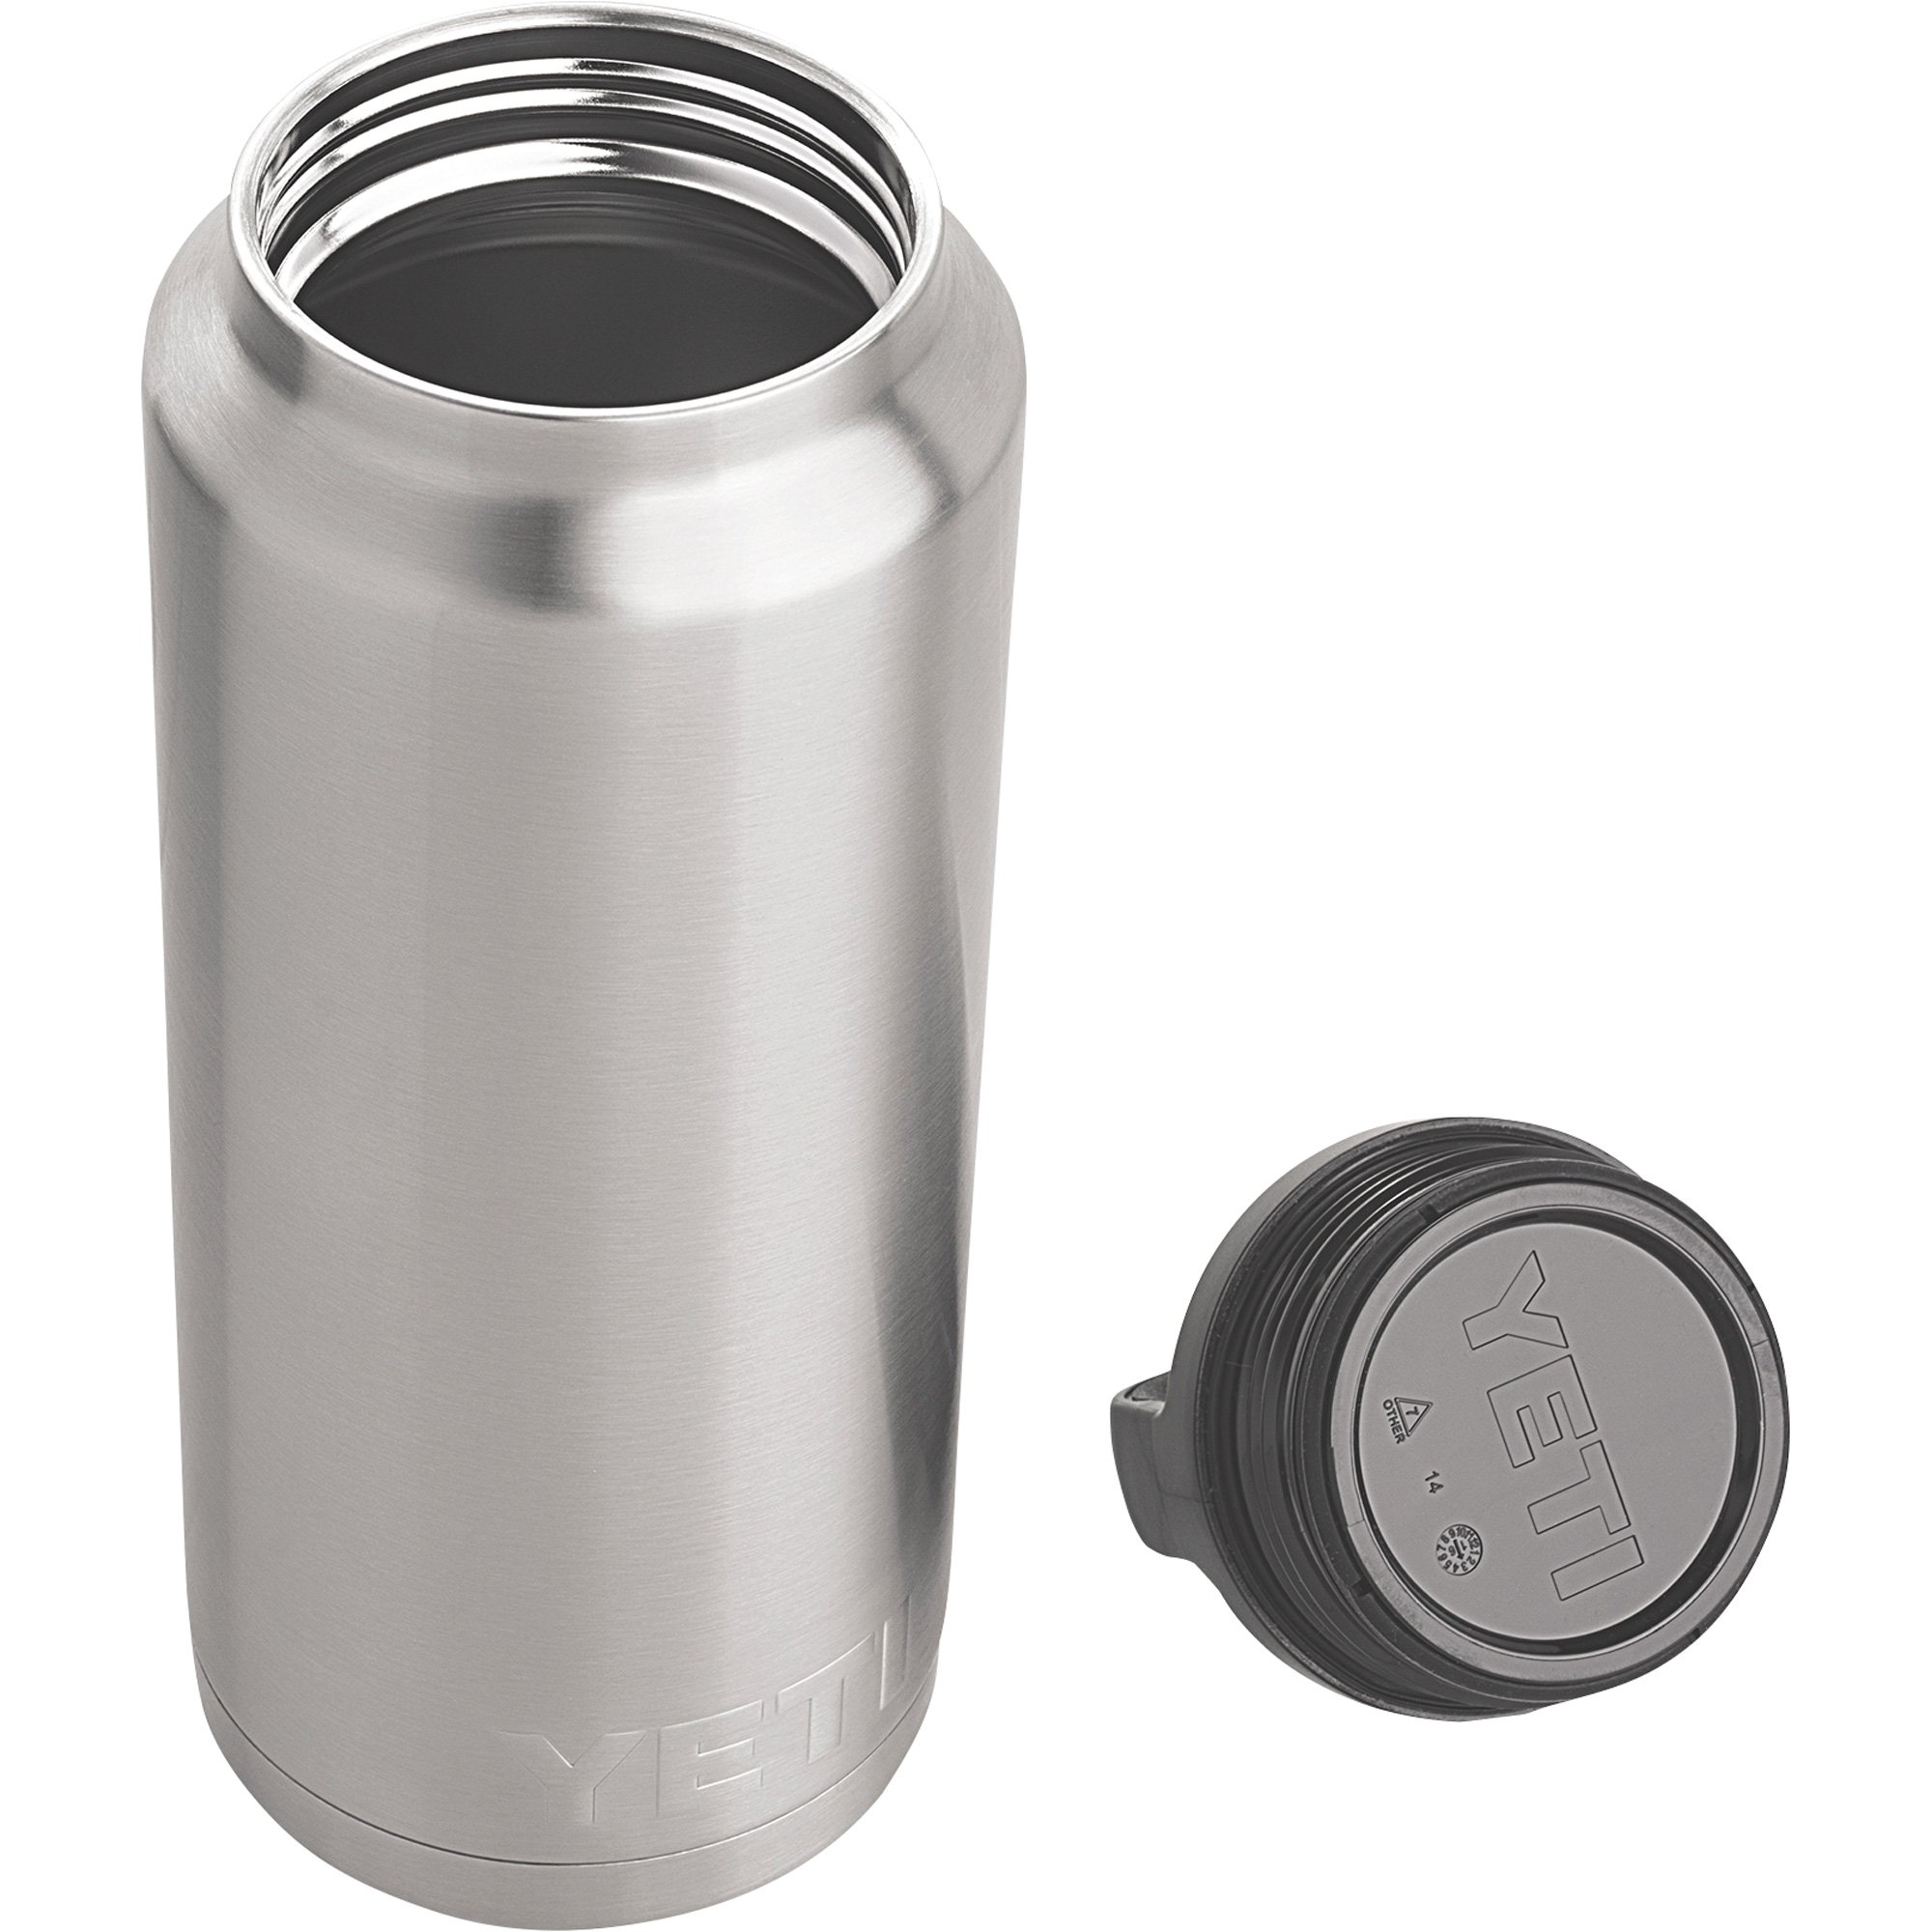 Yeti Stainless Steel Rambler Beverage Cooler — 36-Oz. Capacity